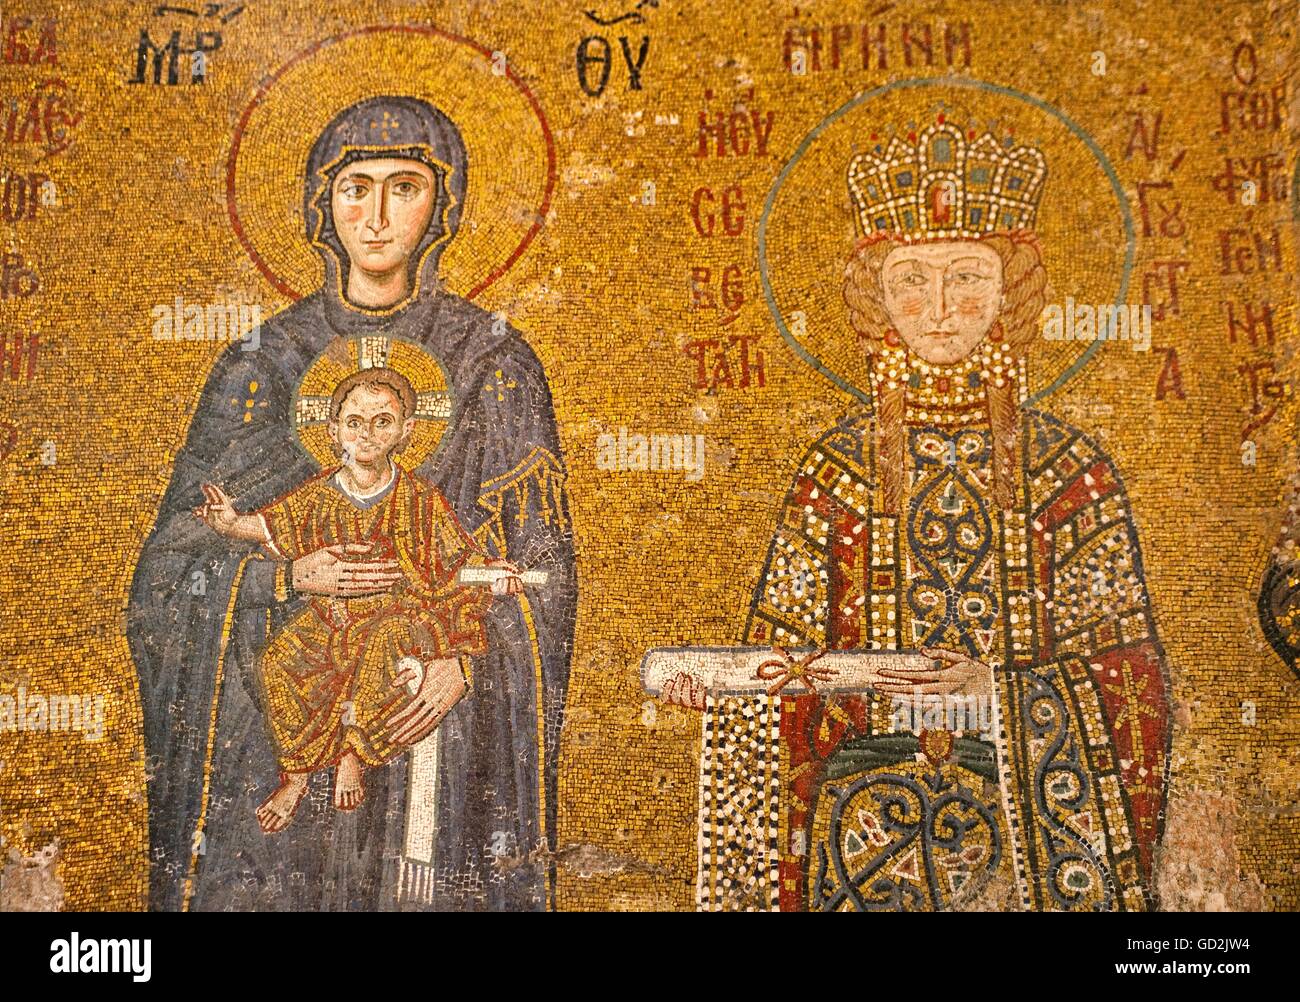 Bildende Kunst, religiöse Kunst, Mosaik, Saint Mary mit Kaiserin Irene, die Hagia Sophia, Istanbul, Artist's Urheberrecht nicht gelöscht werden Stockfoto